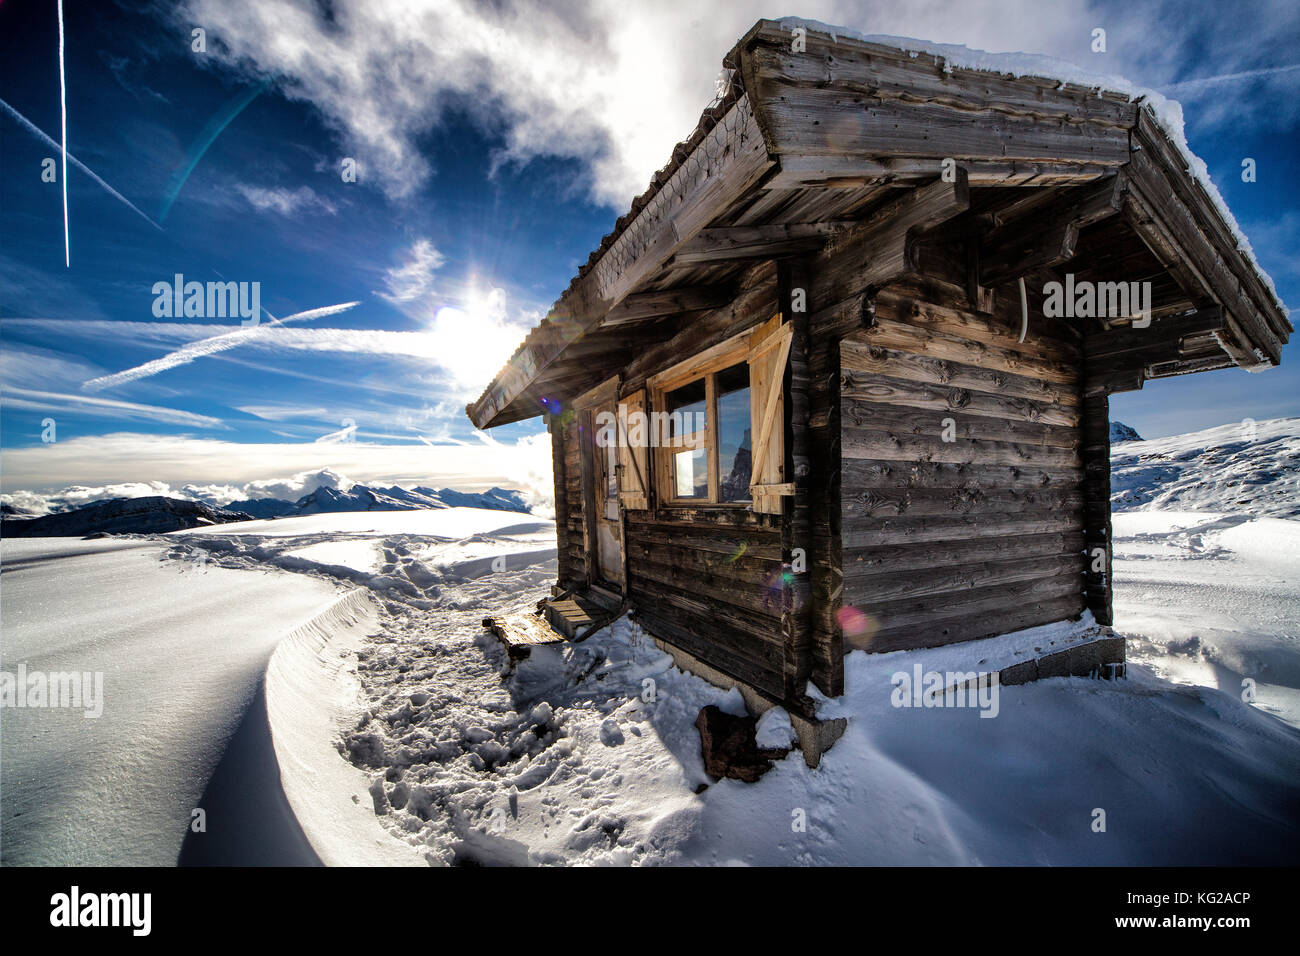 Wooden mountain hut in winter mountain scenery Stock Photo